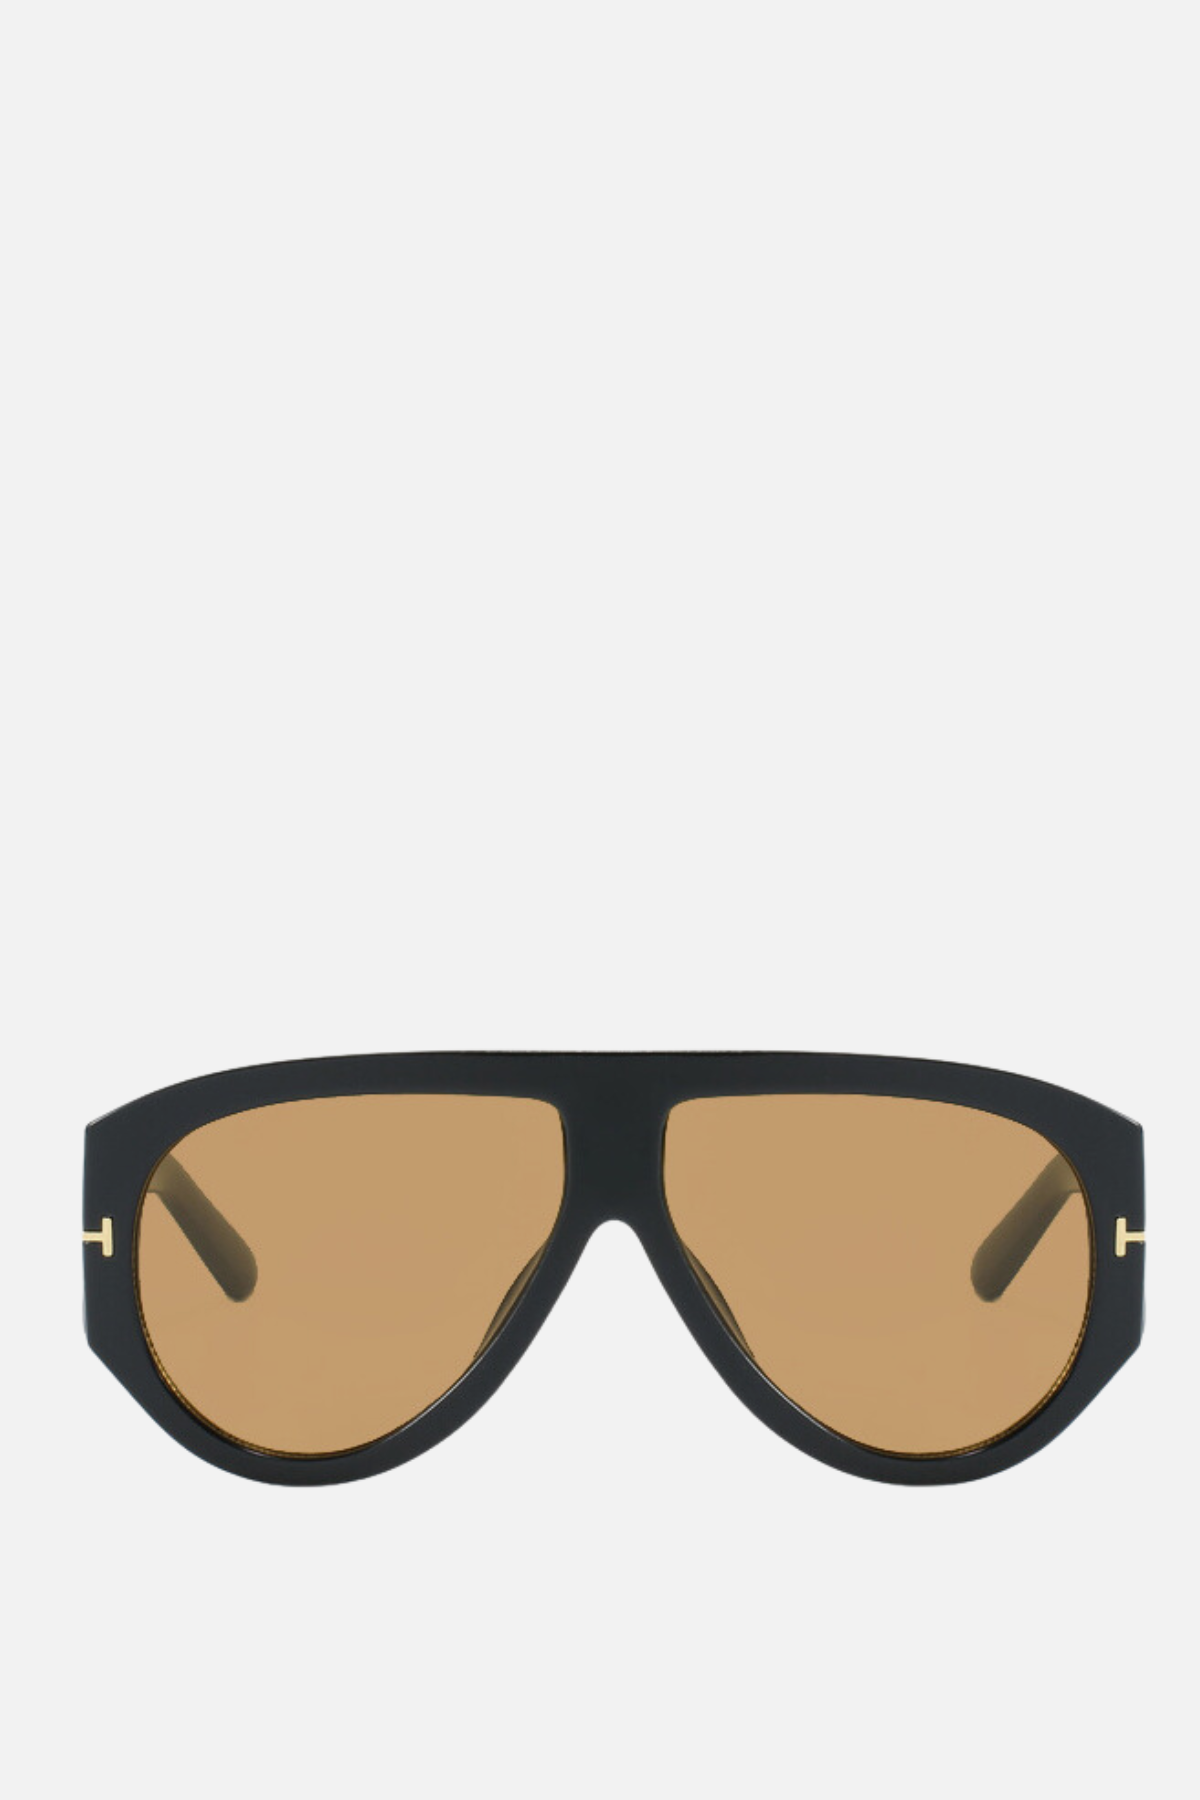 MONACO Brown Tint Oversized Sunglasses